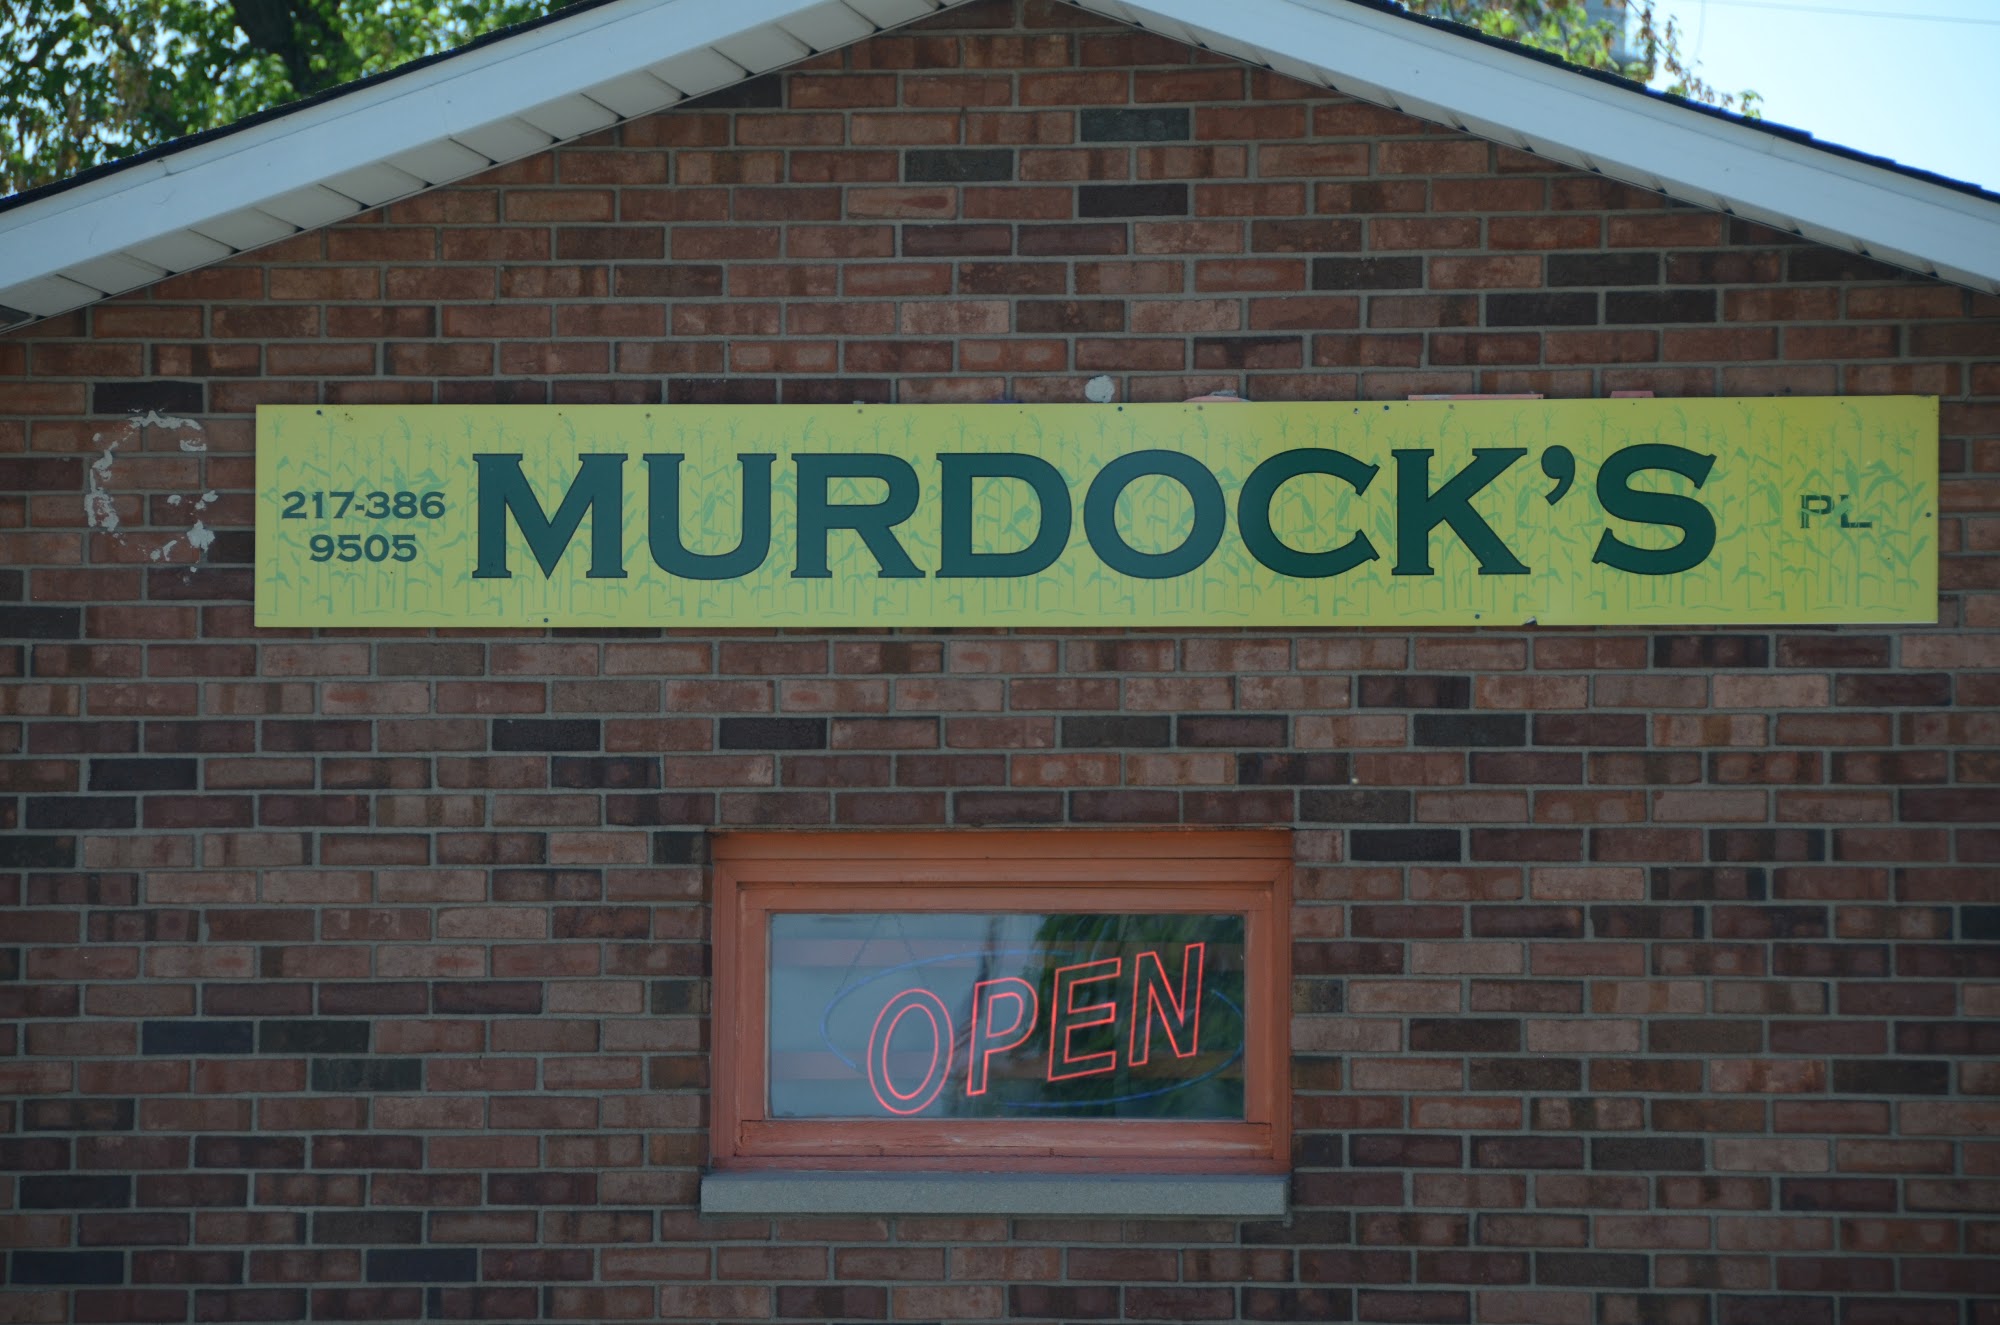 Murdock's Place